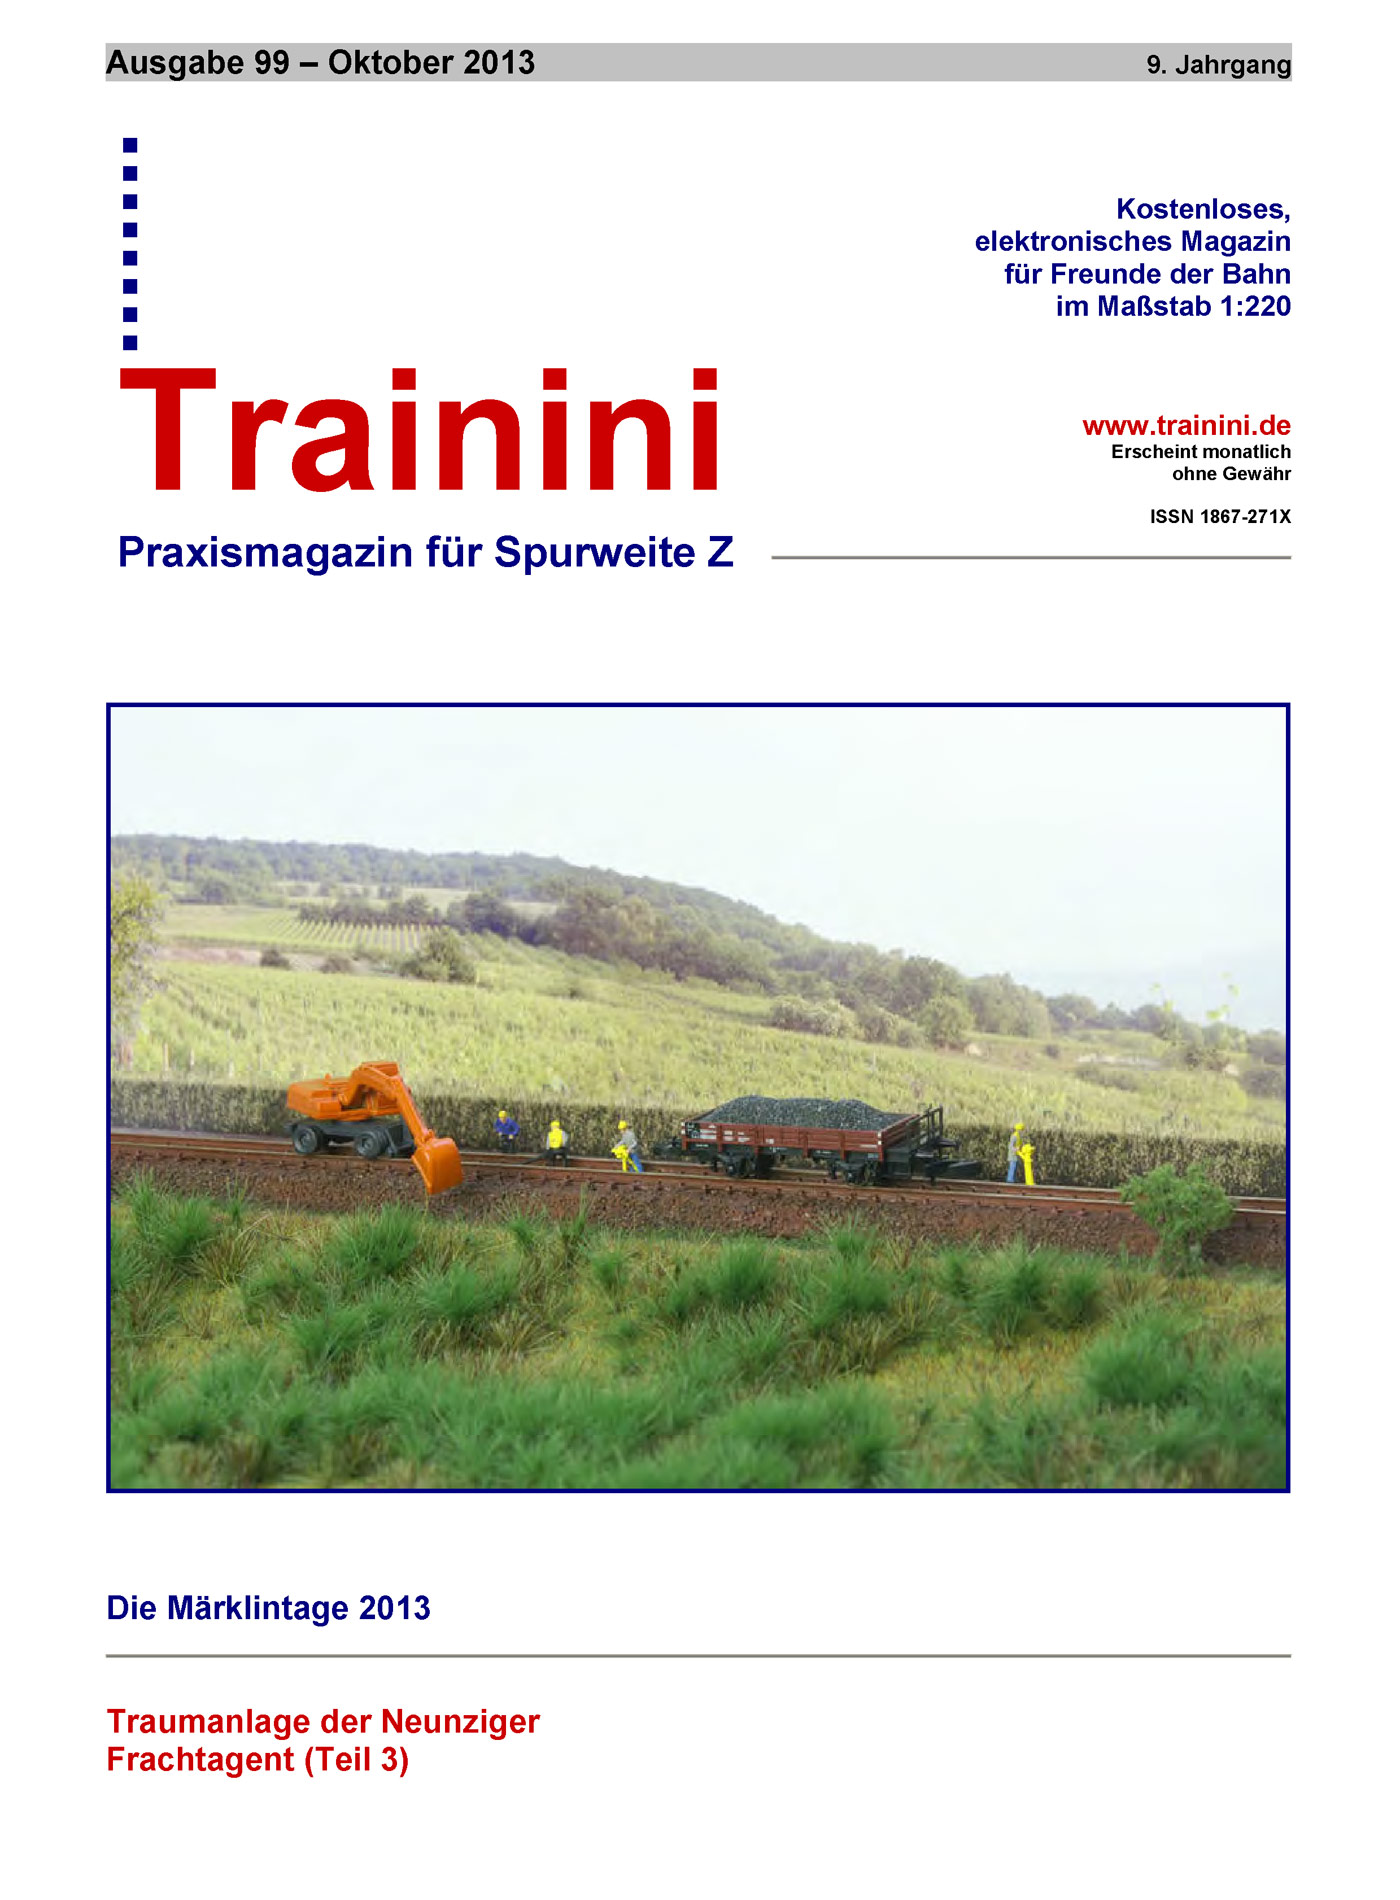 Trainini Ausgabe Oktober 2013